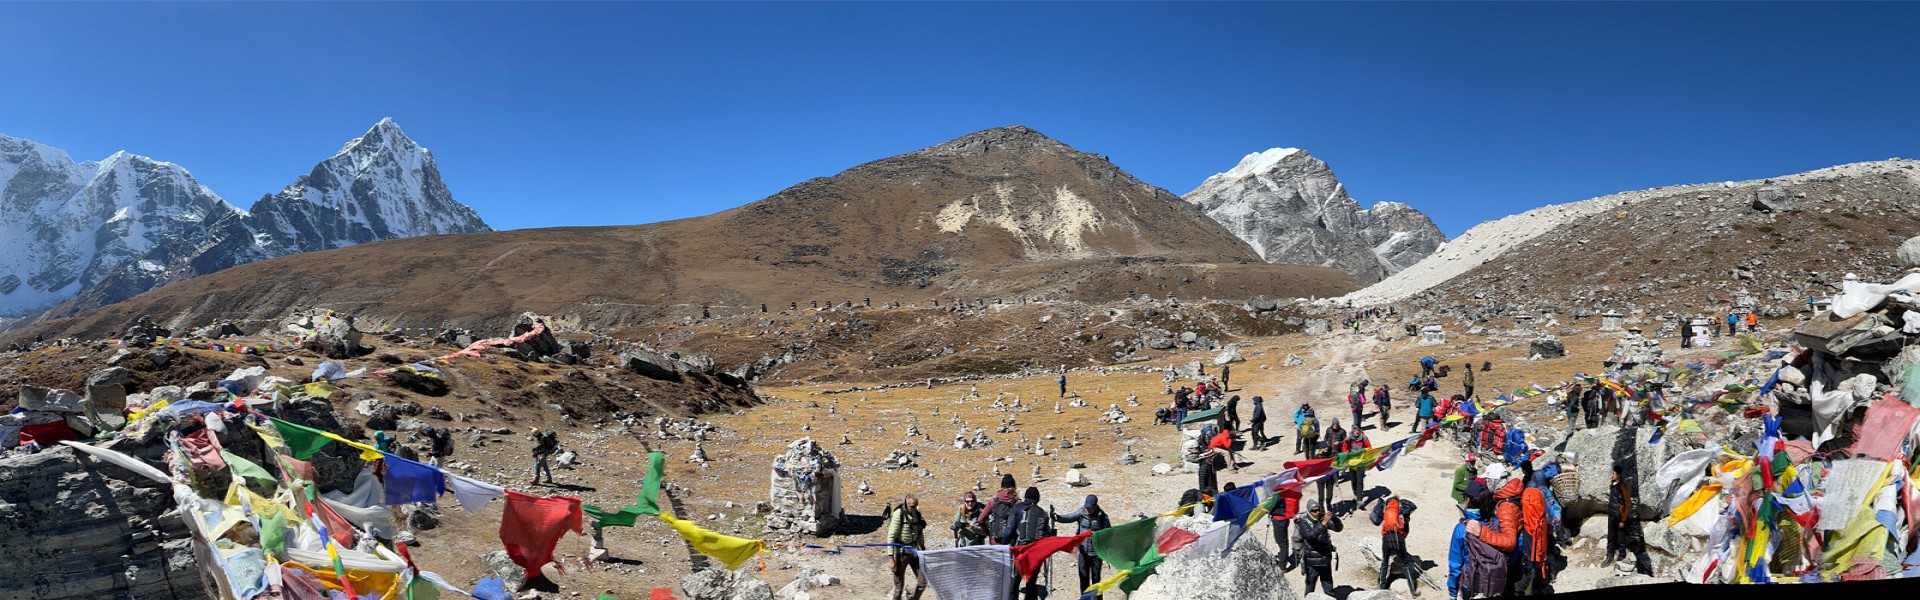 Everest Base Camp trekking path